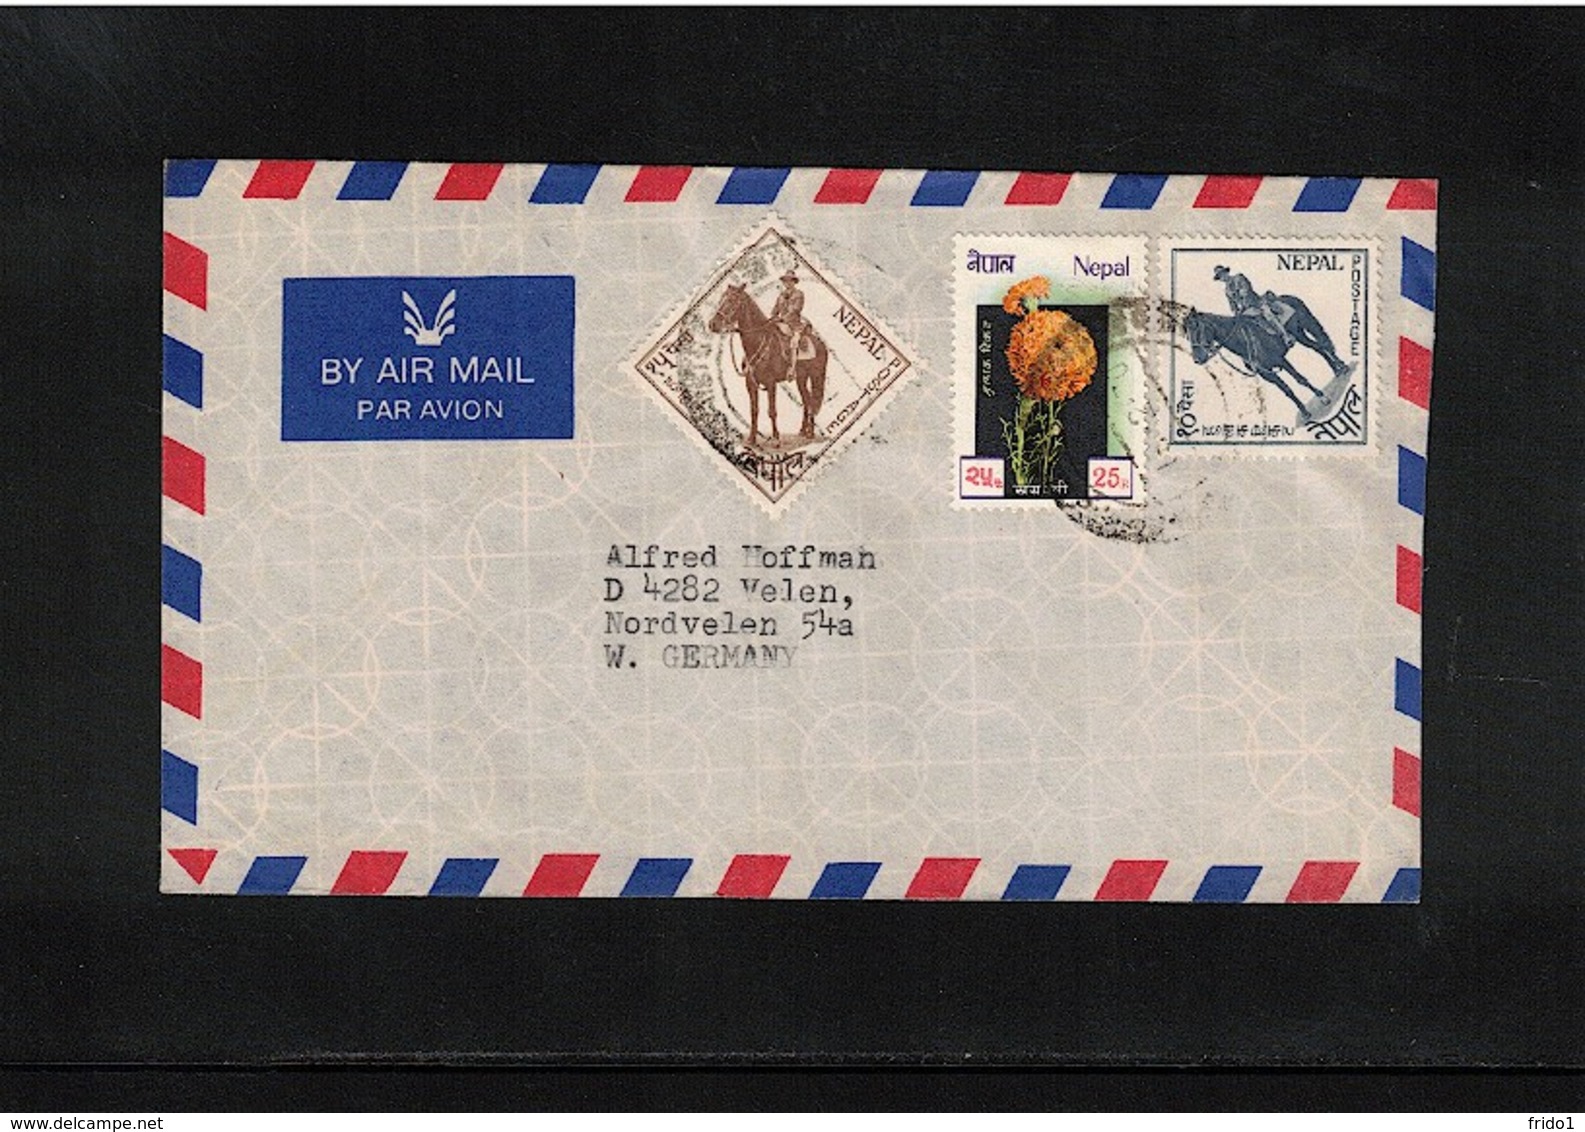 Nepal  Interesting Airmail Letter - Nepal